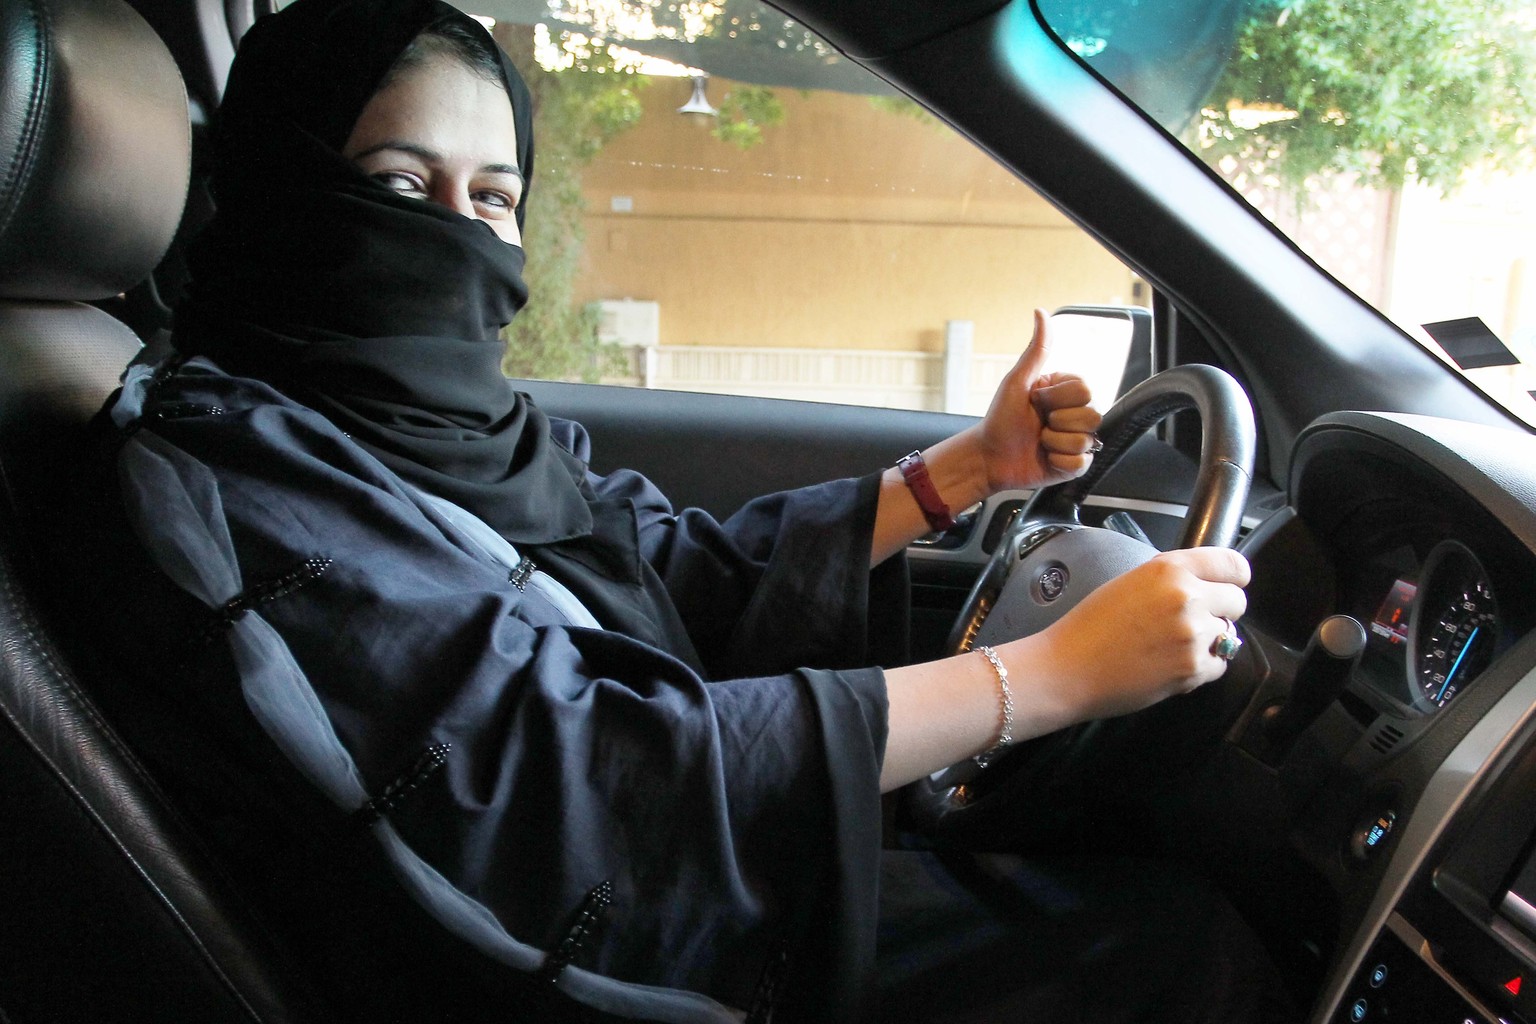 epa06230465 A woman gives a thumb up as she sits behind the wheel of a car in Riyadh, Saudi Arabia, 27 September 2017. According to reports on 26 September 2017, Saudi Arabia’s King Salman bin Abdulaz ...